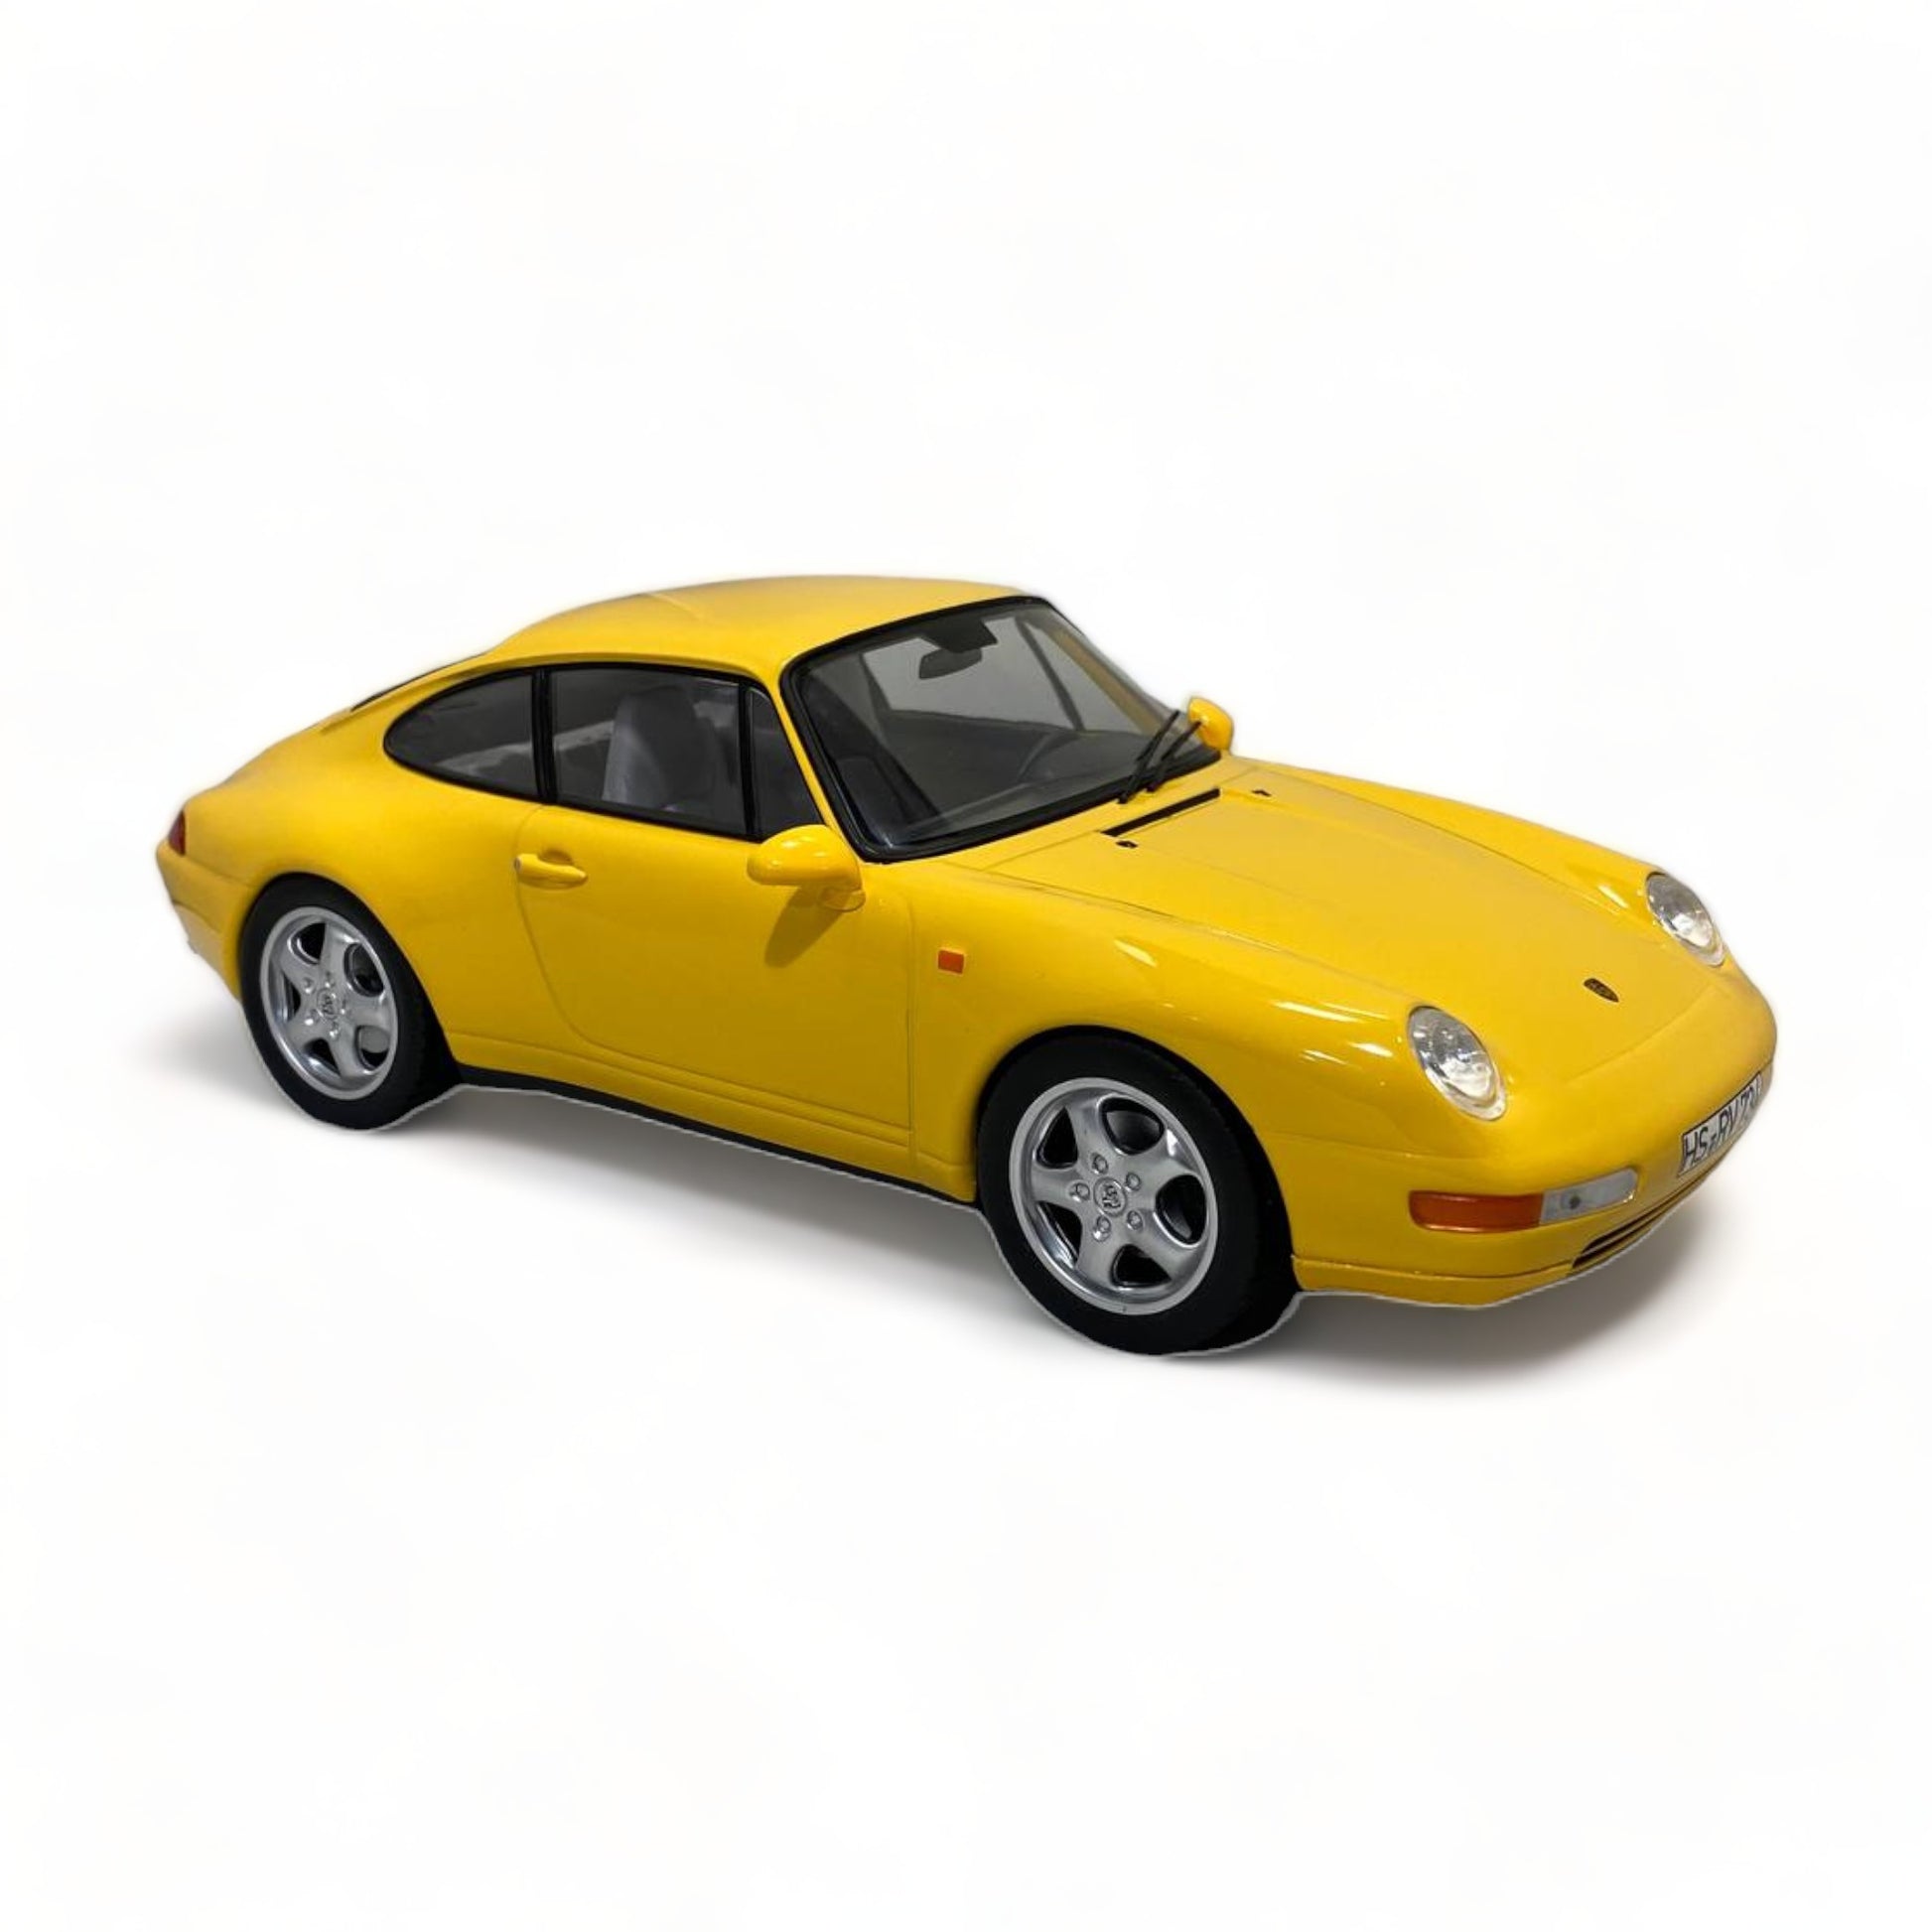 1/18 Norev Metal Diecast - Porsche 911 Carrera 1994 in Eye-Catching Yellow|Sold in Dturman.com Dubai UAE.